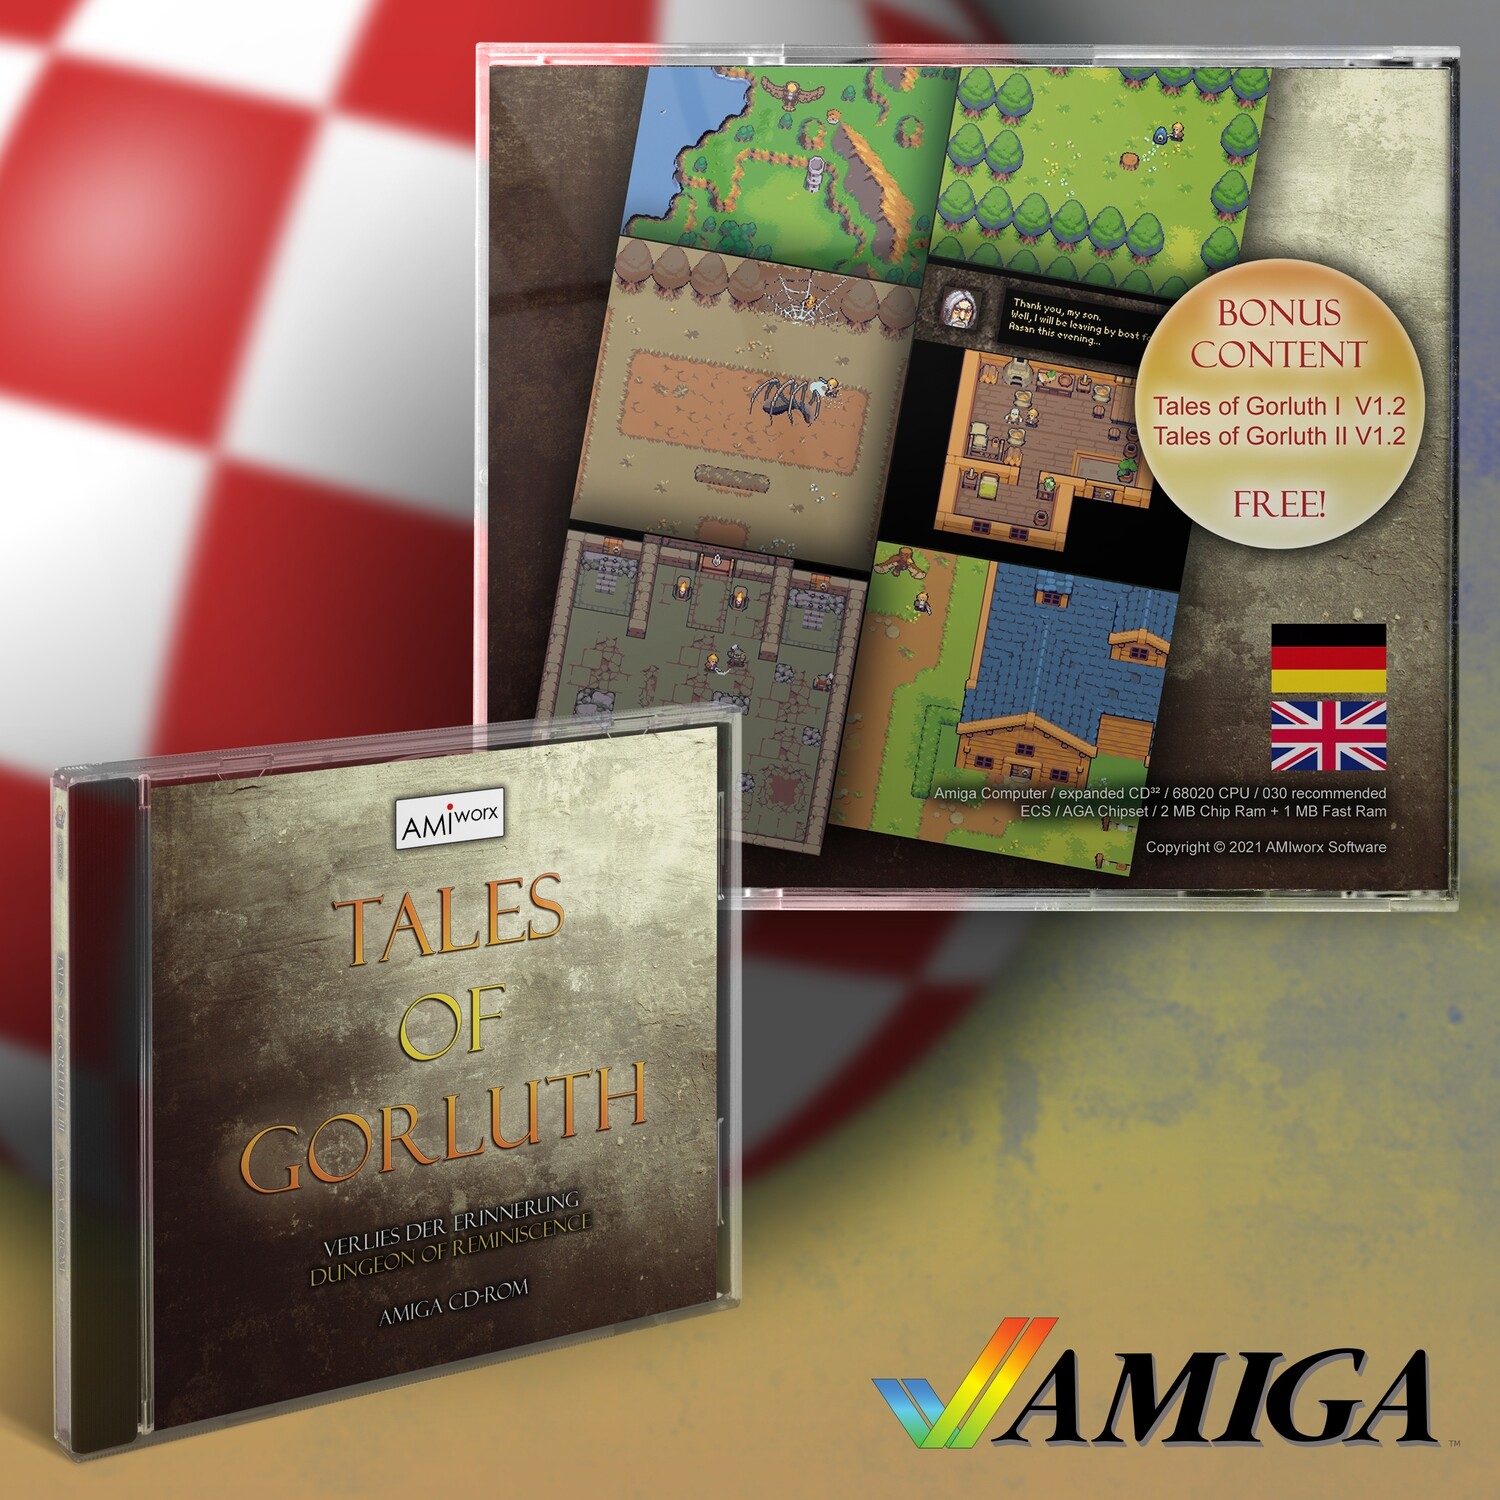 Tales of Gorluth III - AMIGA CD-ROM / CD32 - VERSANDKOSTENFREI / FREE SHIPPING